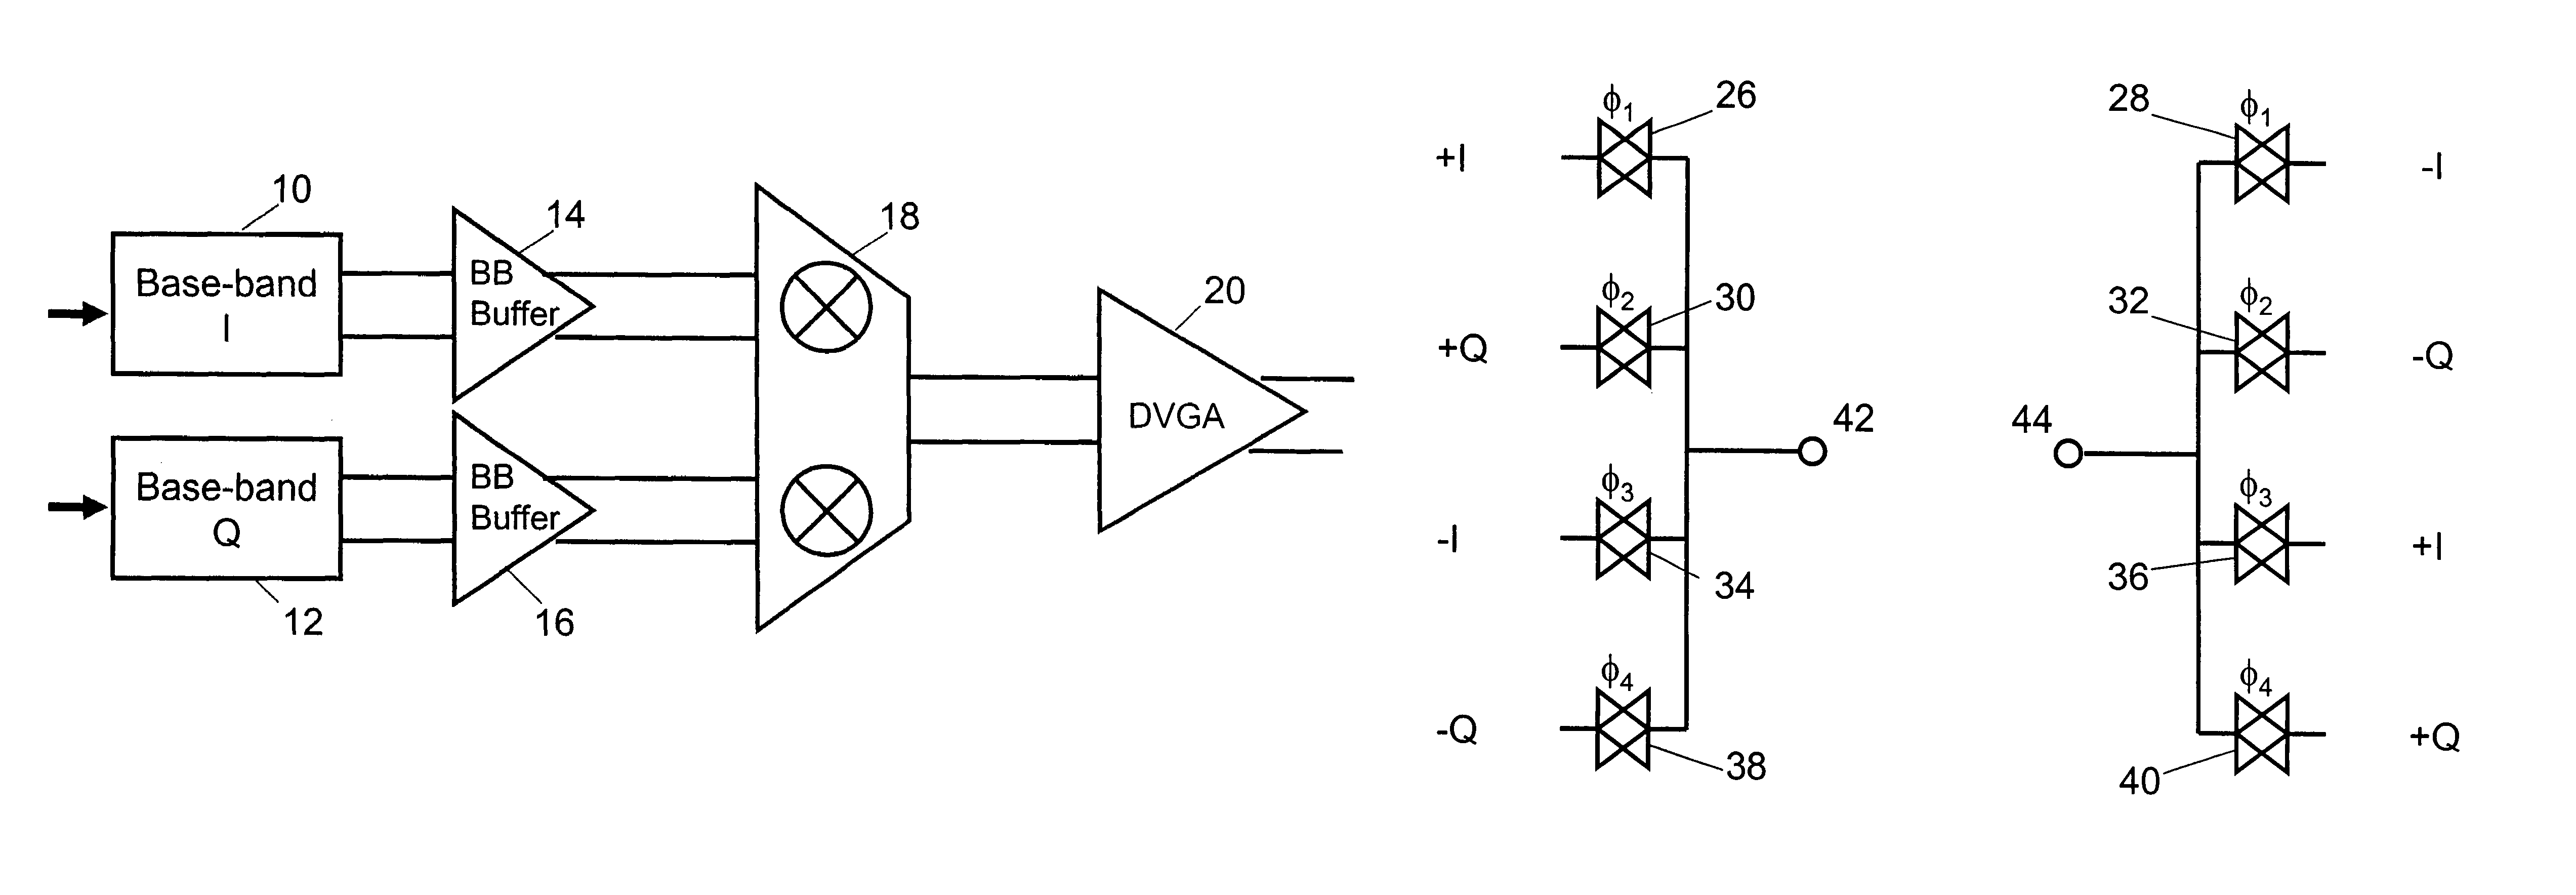 RF transmitter with interleaved IQ modulation